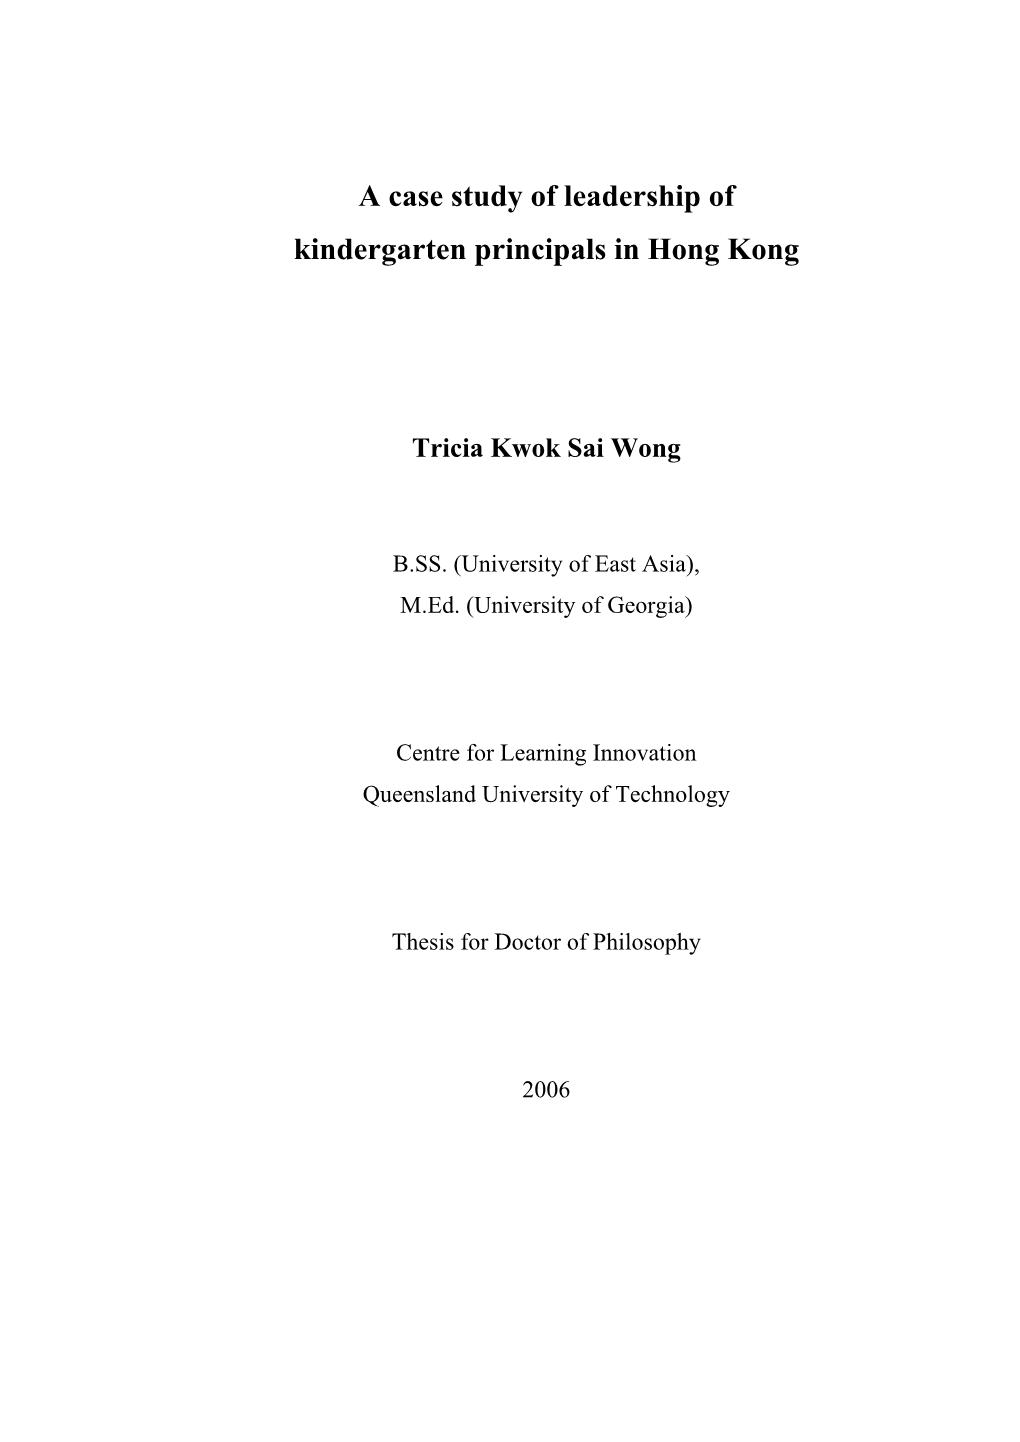 A Case Study of Leadership of Kindergarten Principals in Hong Kong